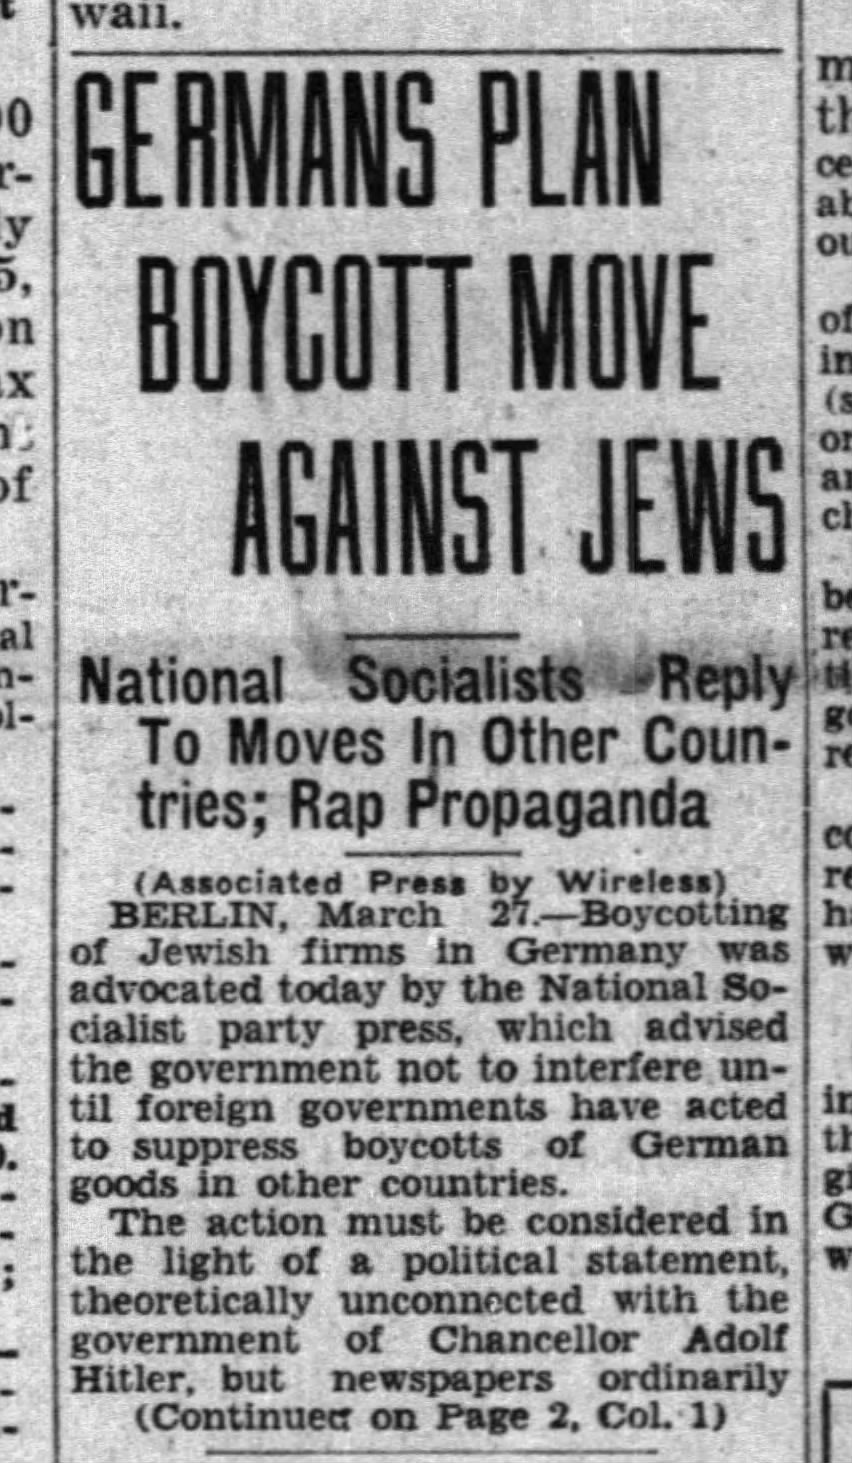 Germans Plan Boycott Move Against Jews